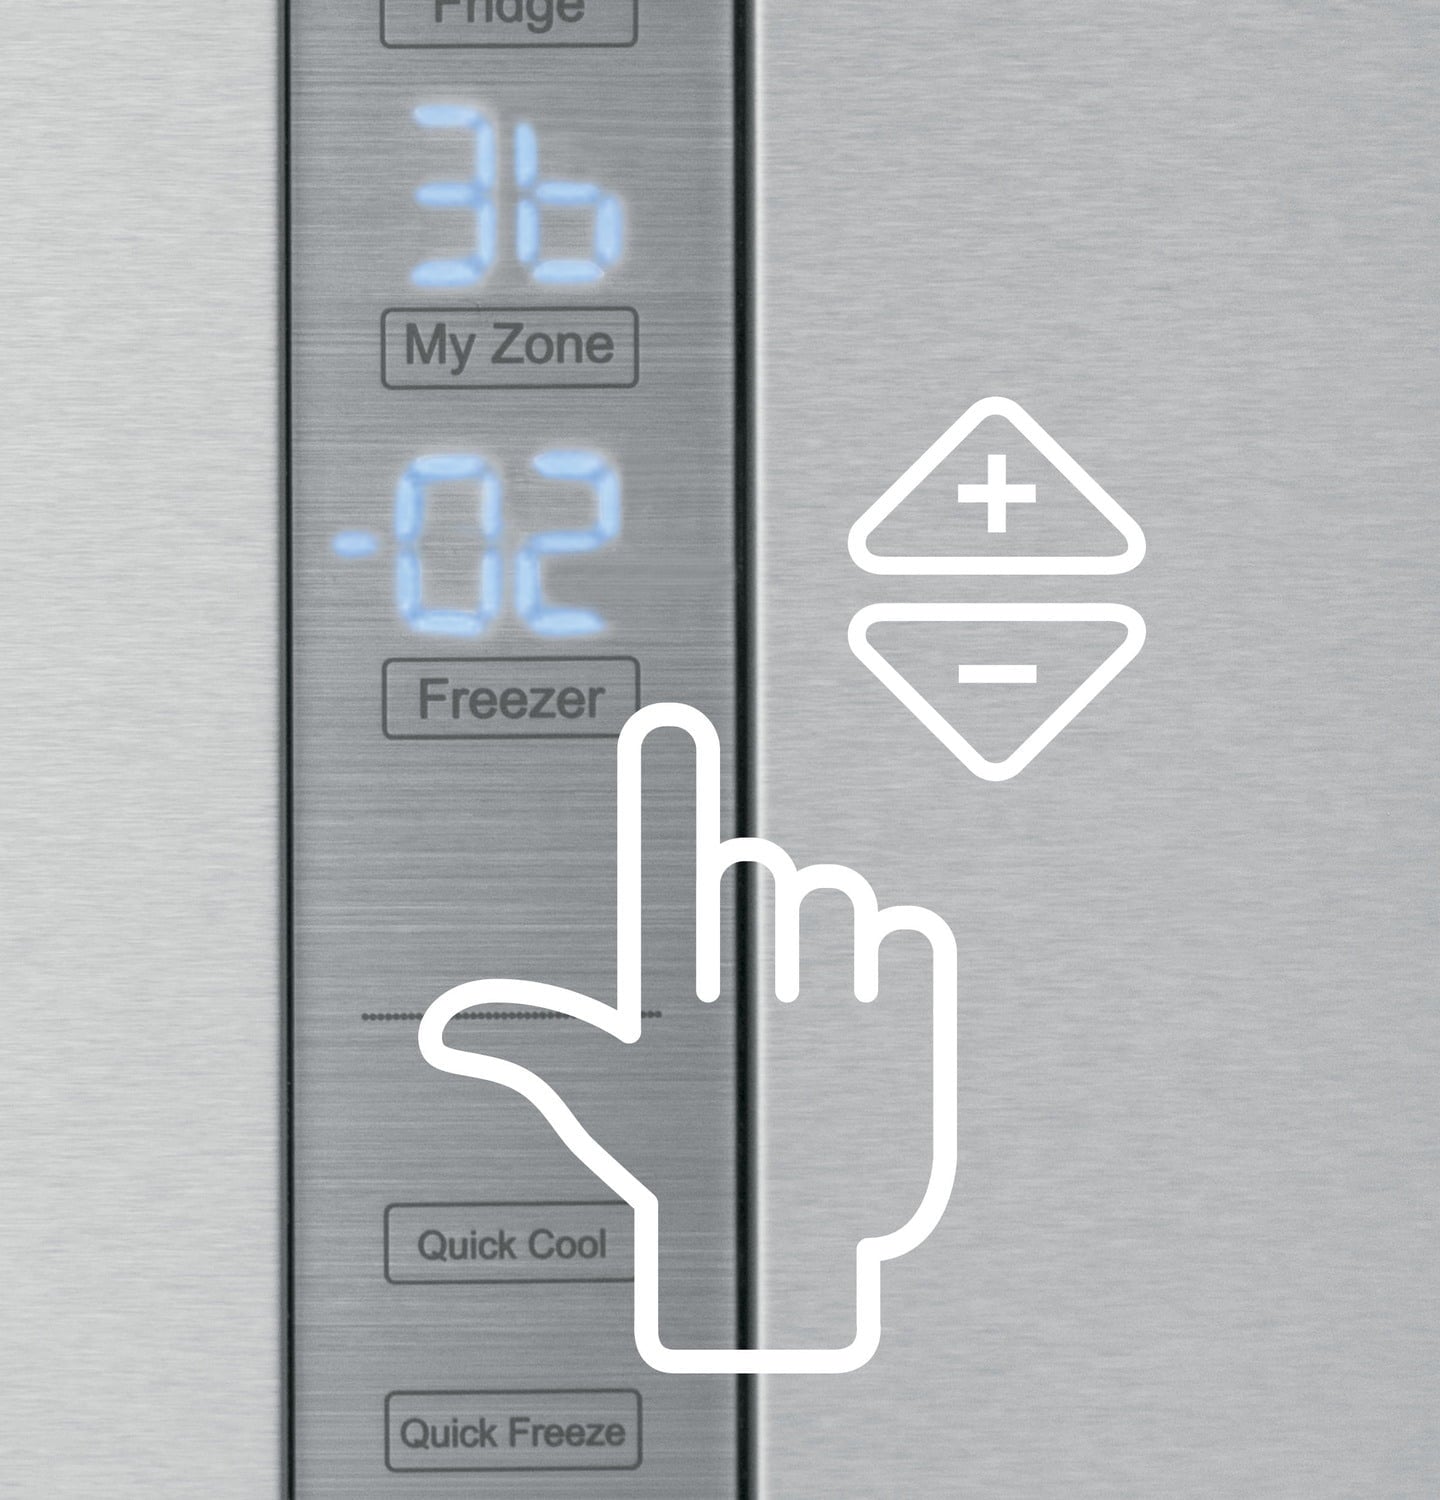 Haier HRB15N3BGS 15 Cu. Ft. Bottom Freezer Refrigerator